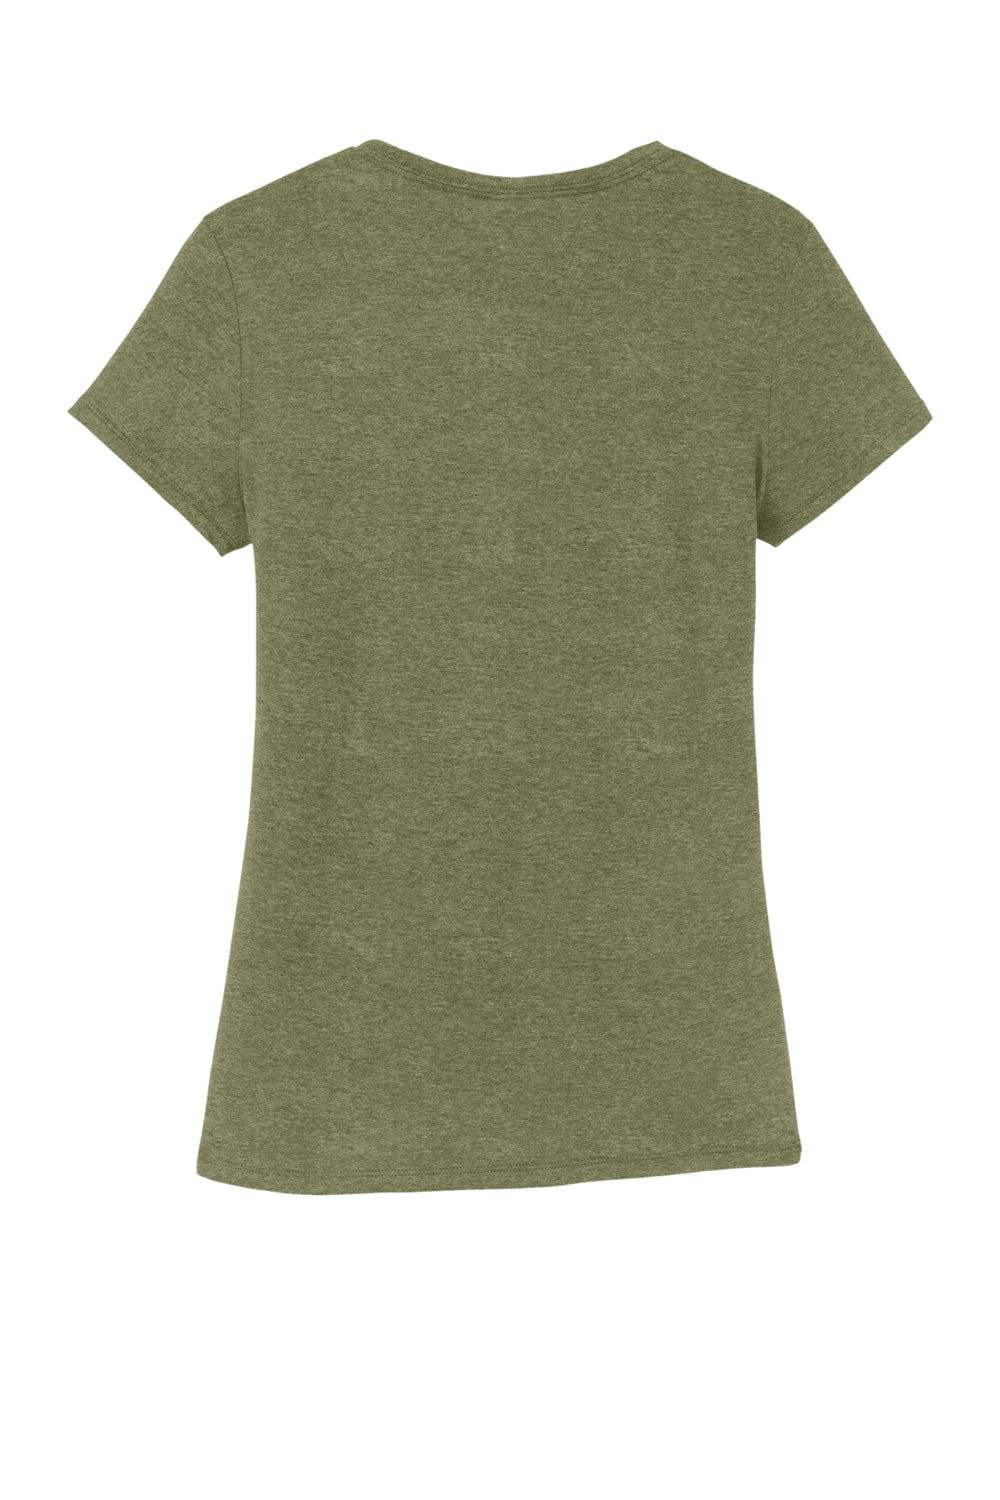 District DM130L Womens Perfect Tri Short Sleeve Crewneck T-Shirt Military Green Frost Flat Back